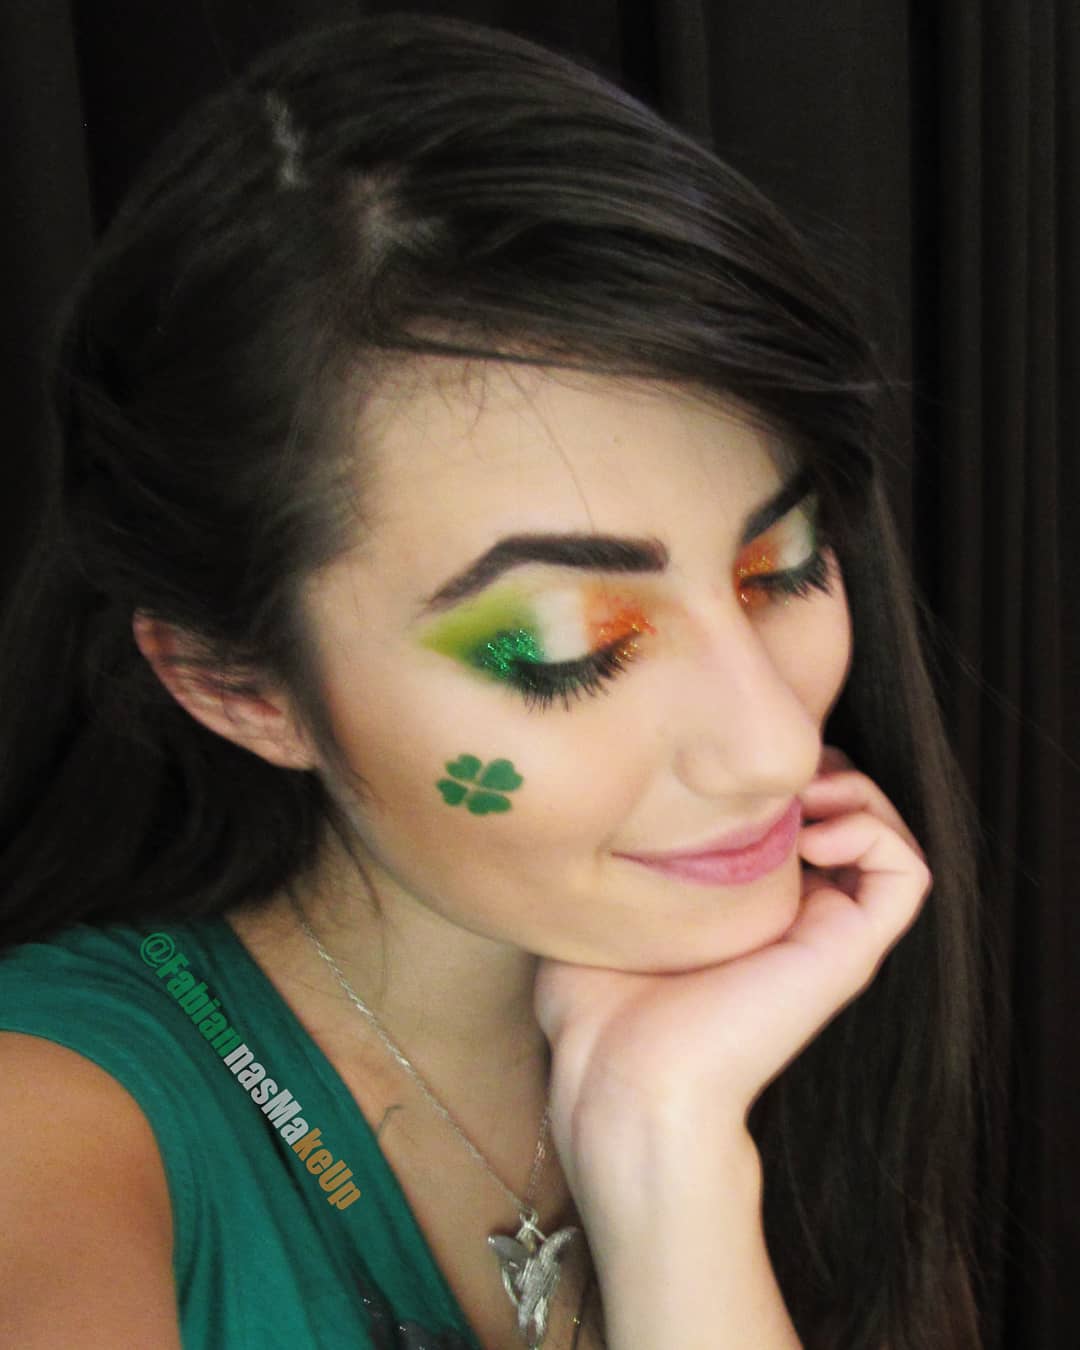 Impressive irish flag eyemakeup with clover.